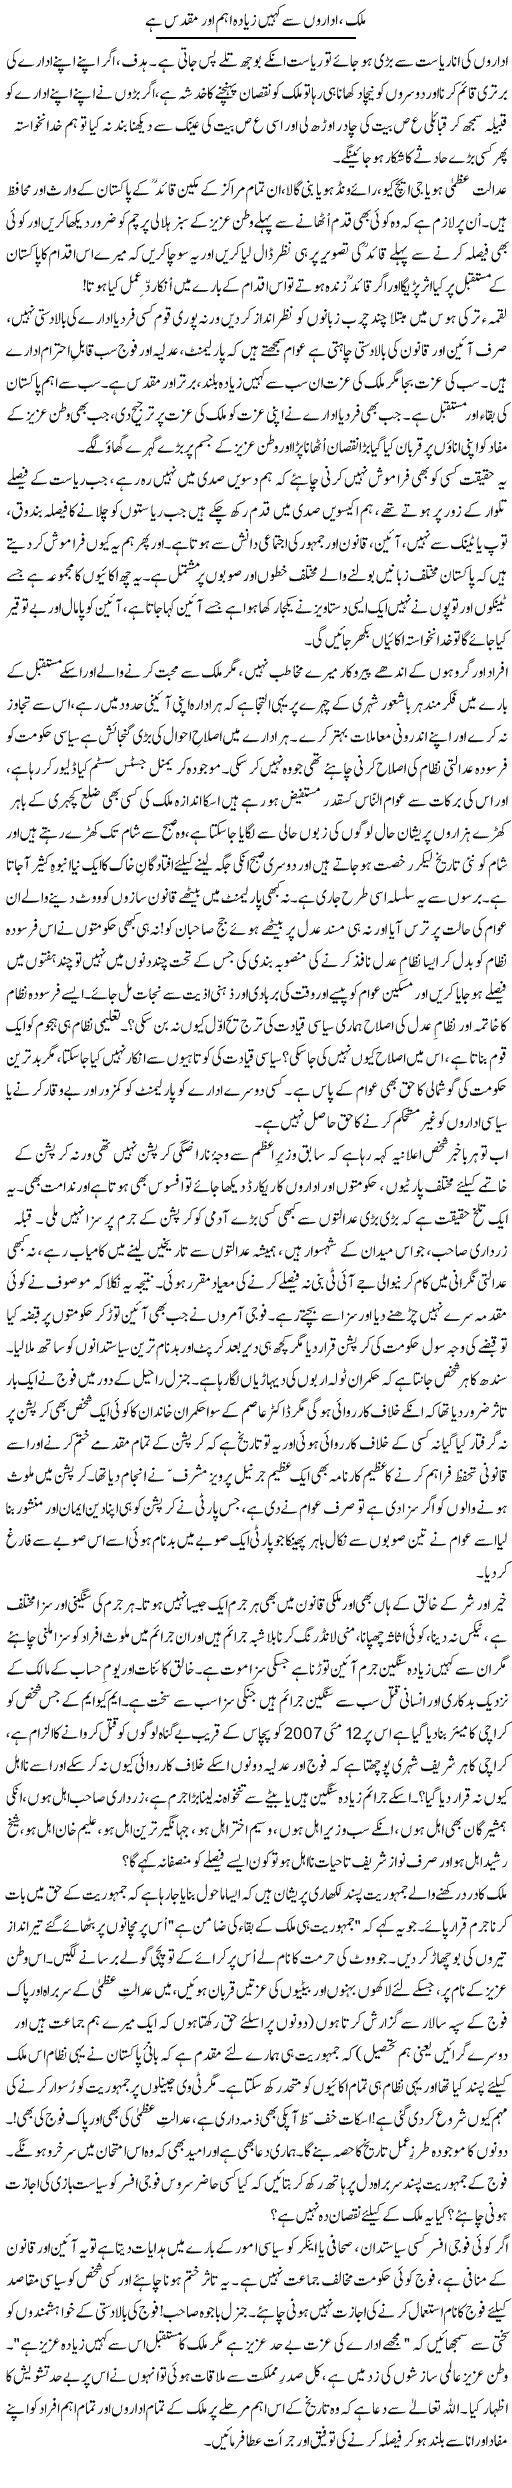 Mulk, Idaron Se Kahin Zyada Aham Aur Muqaddas Hai | Zulfiqar Ahmed Cheema | Daily Urdu Columns